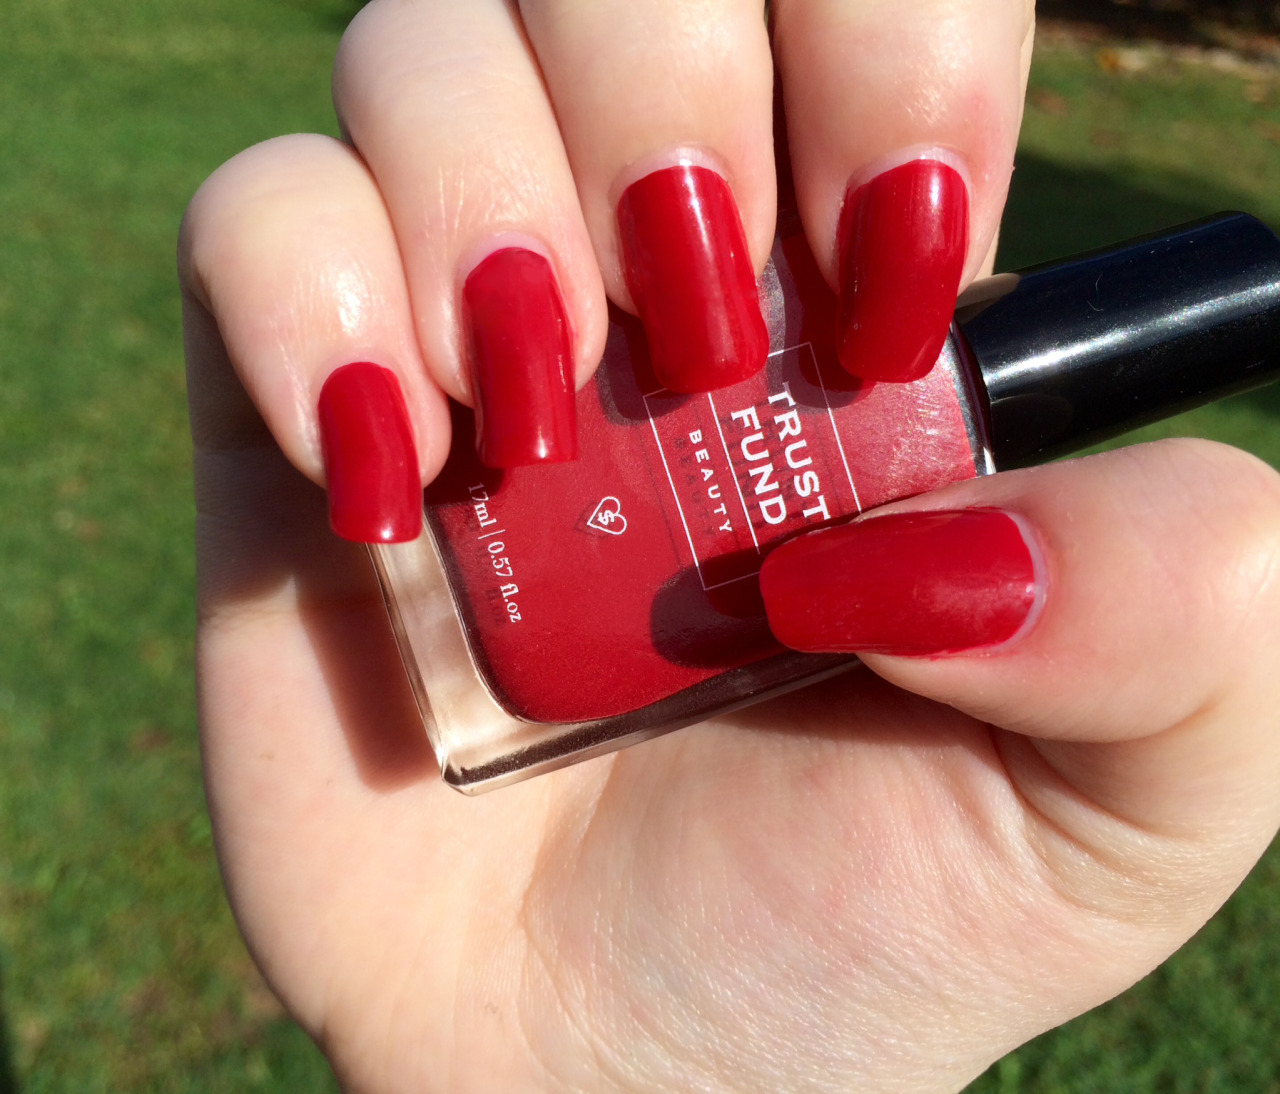 nailpornography:  trustfundbeauty sent me this gorgeous creamy red polish called